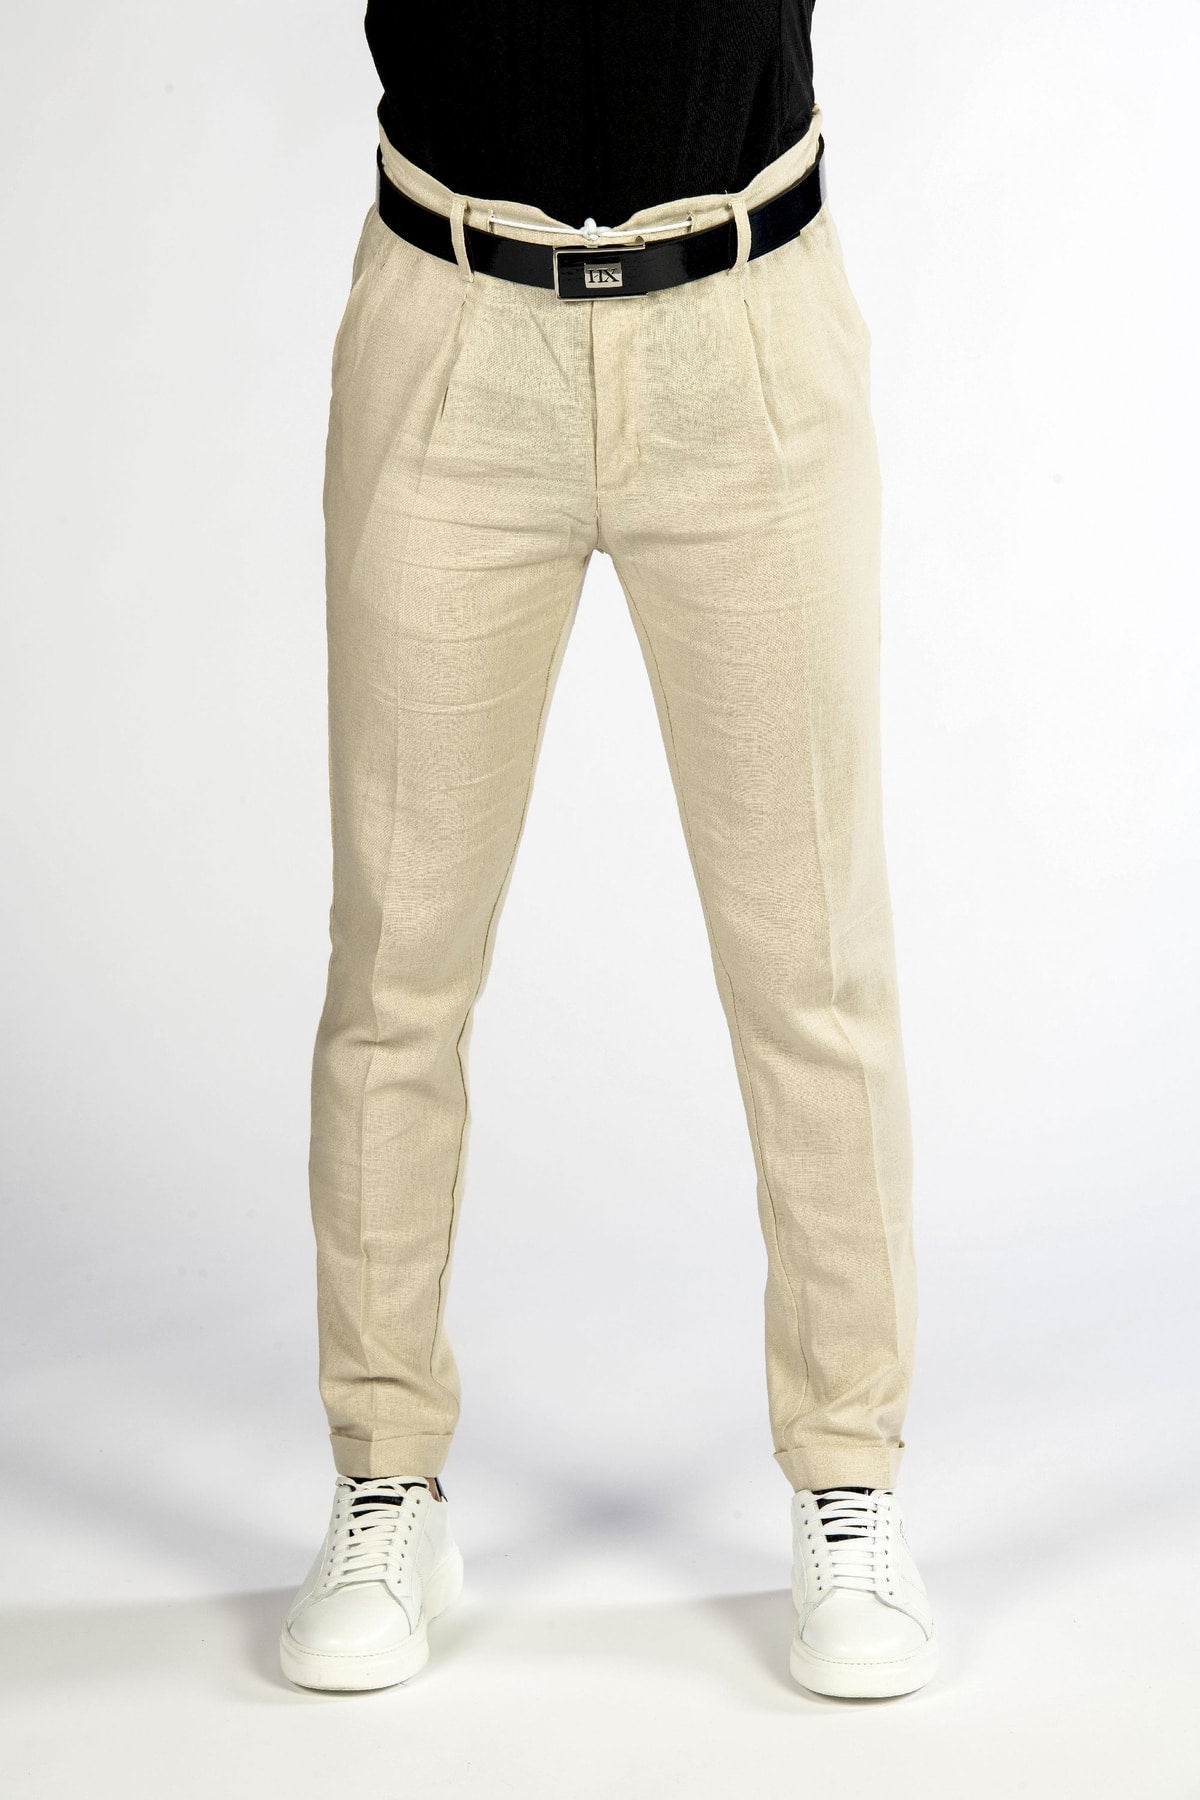 Pantaloni uomo in lino beige con cintura front